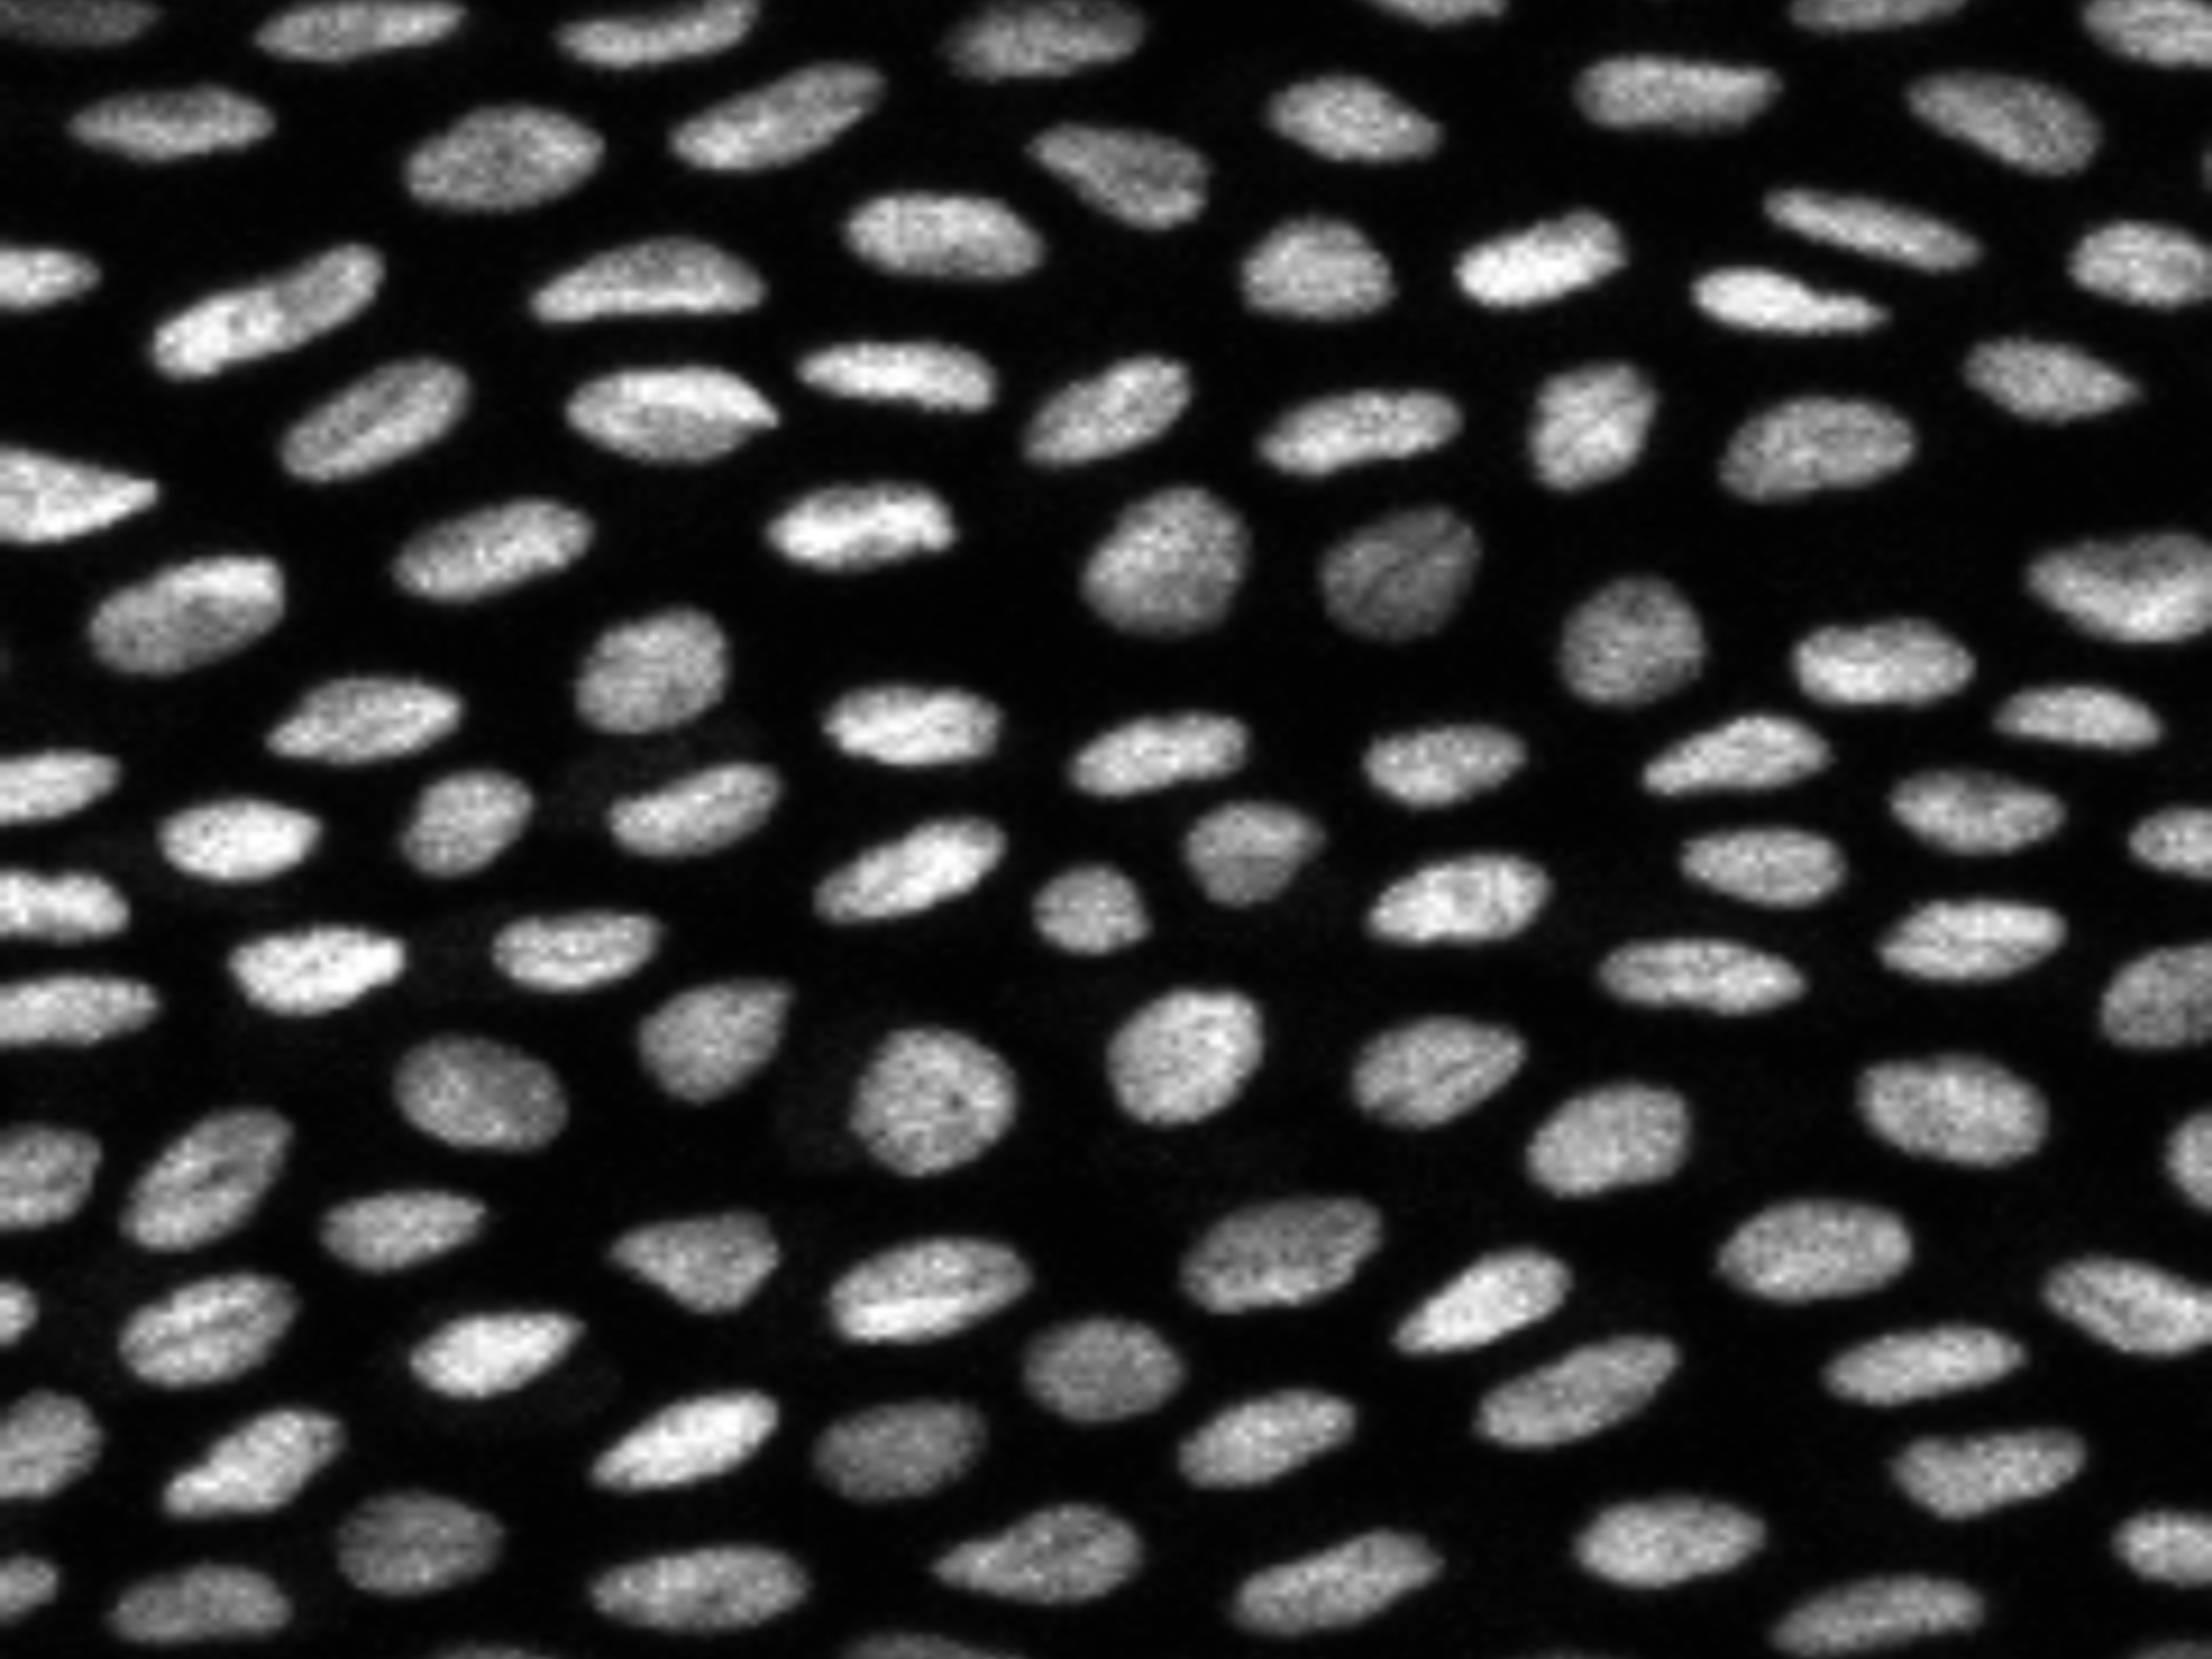 Zebrafish tailfin’s epithelial cells